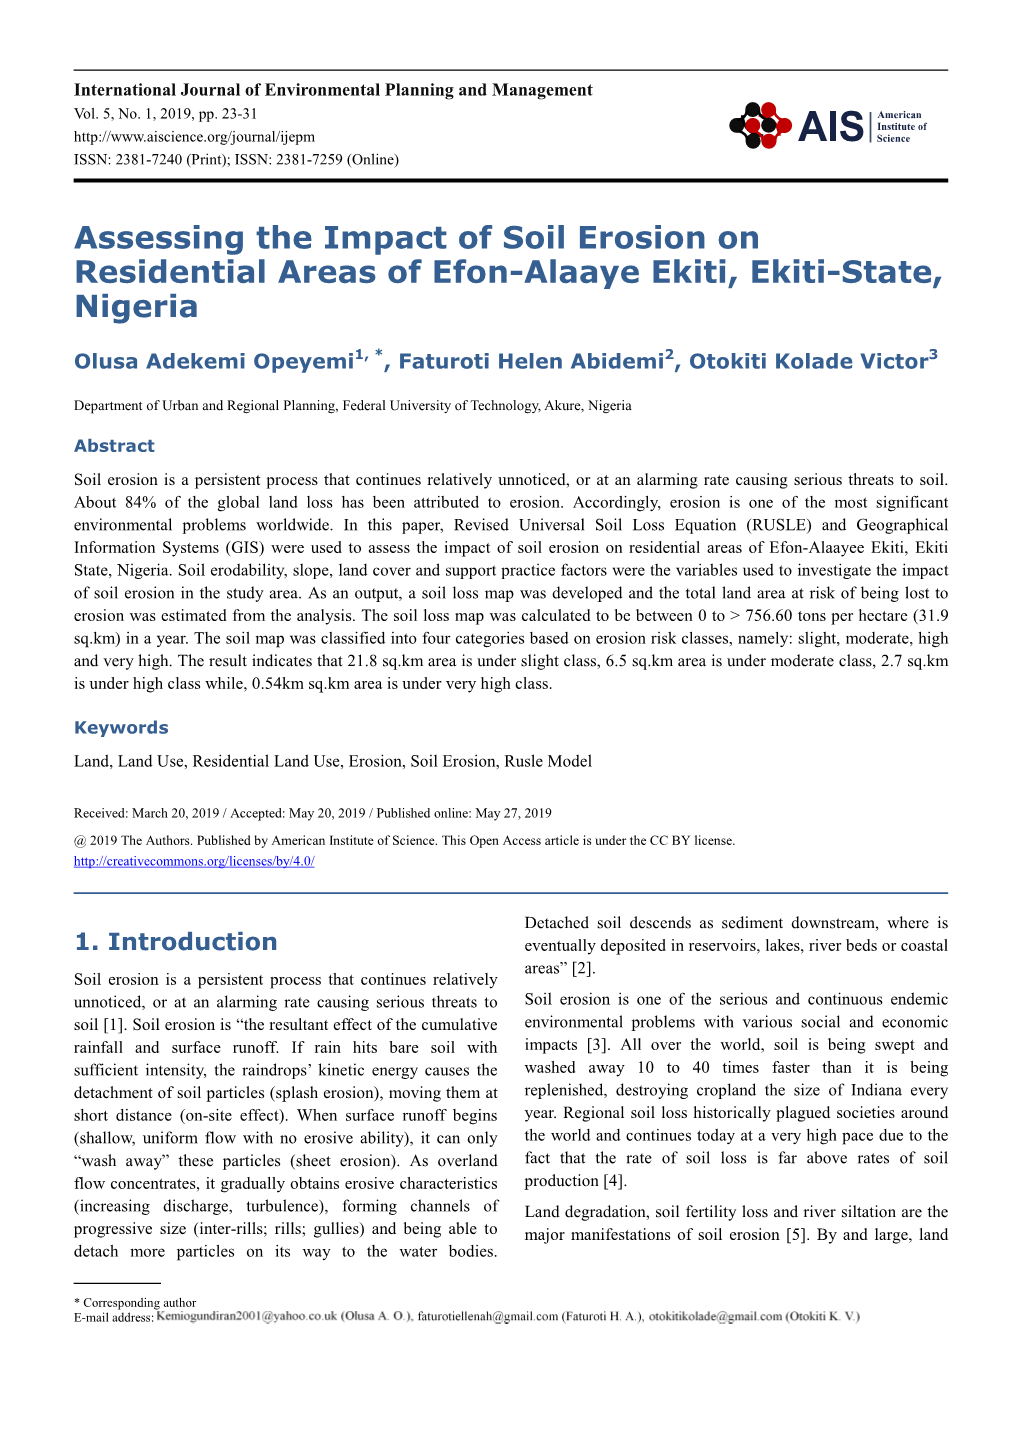 Assessing the Impact of Soil Erosion on Residential Areas of Efon-Alaaye Ekiti, Ekiti-State, Nigeria